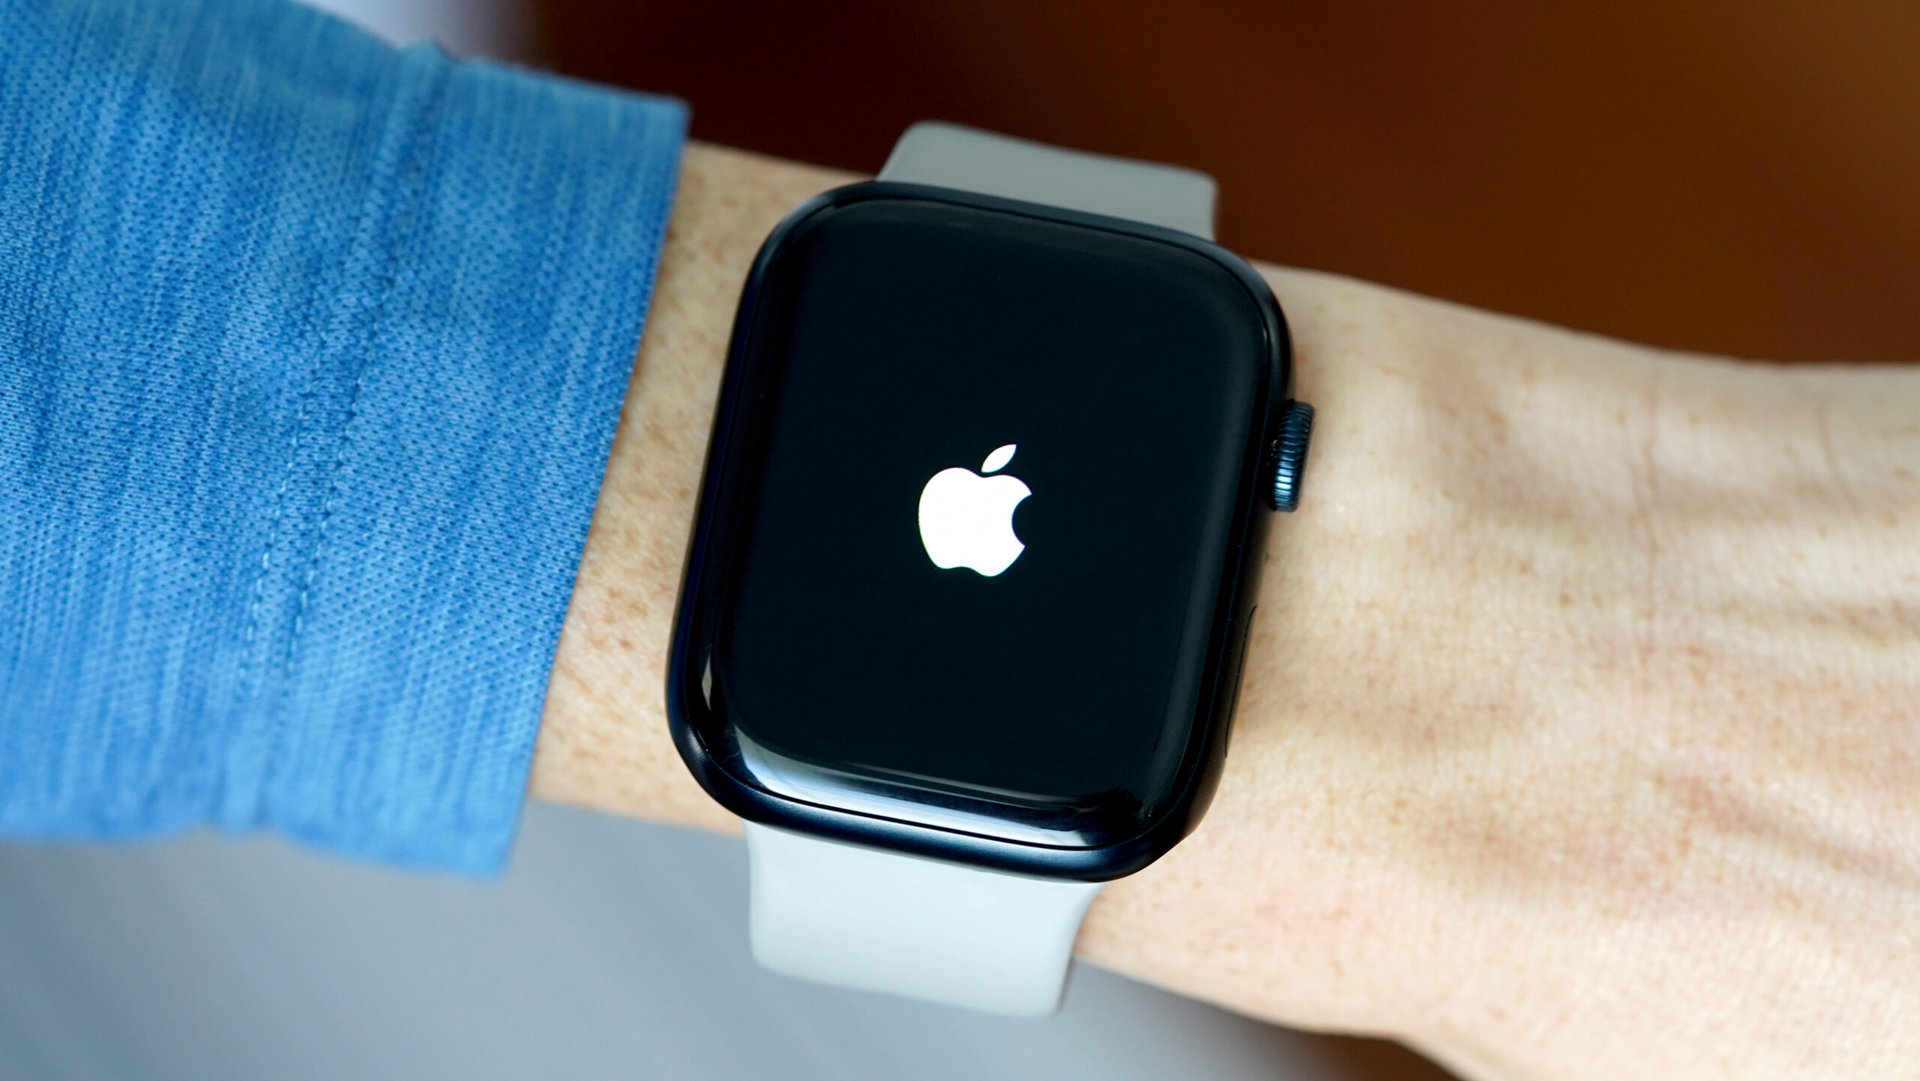 An Apple Watch displays the Apple logo.